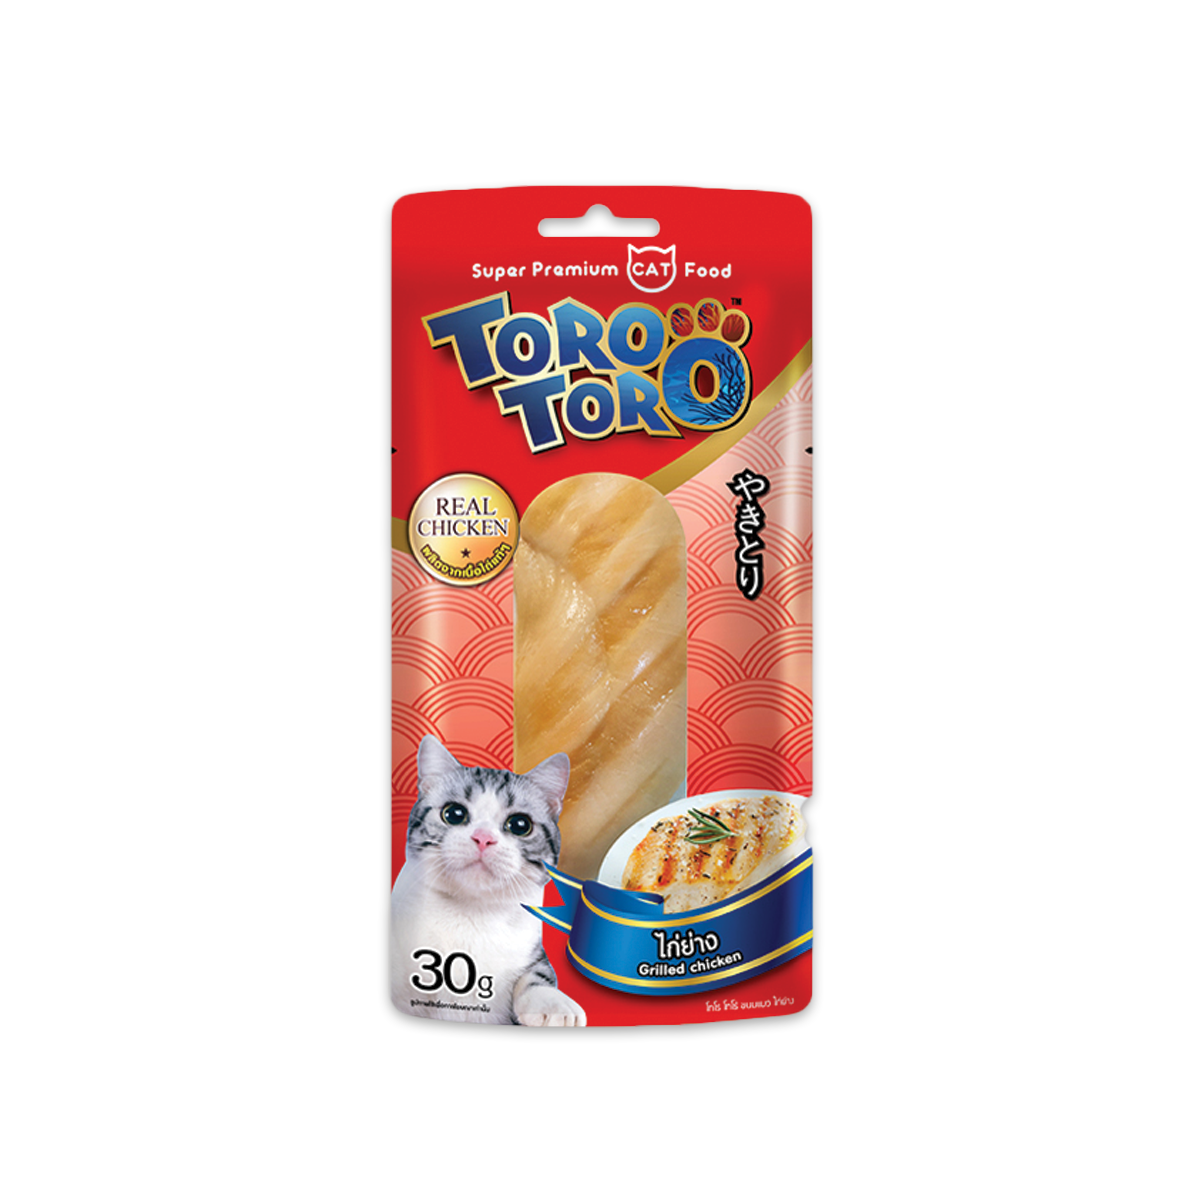 Toro Toro Grilled Chicken โทโร โทโร่ อาหารว่างสำหรับแมวไก่ย่าง ขนาด 30 กรัม (12 ซอง)